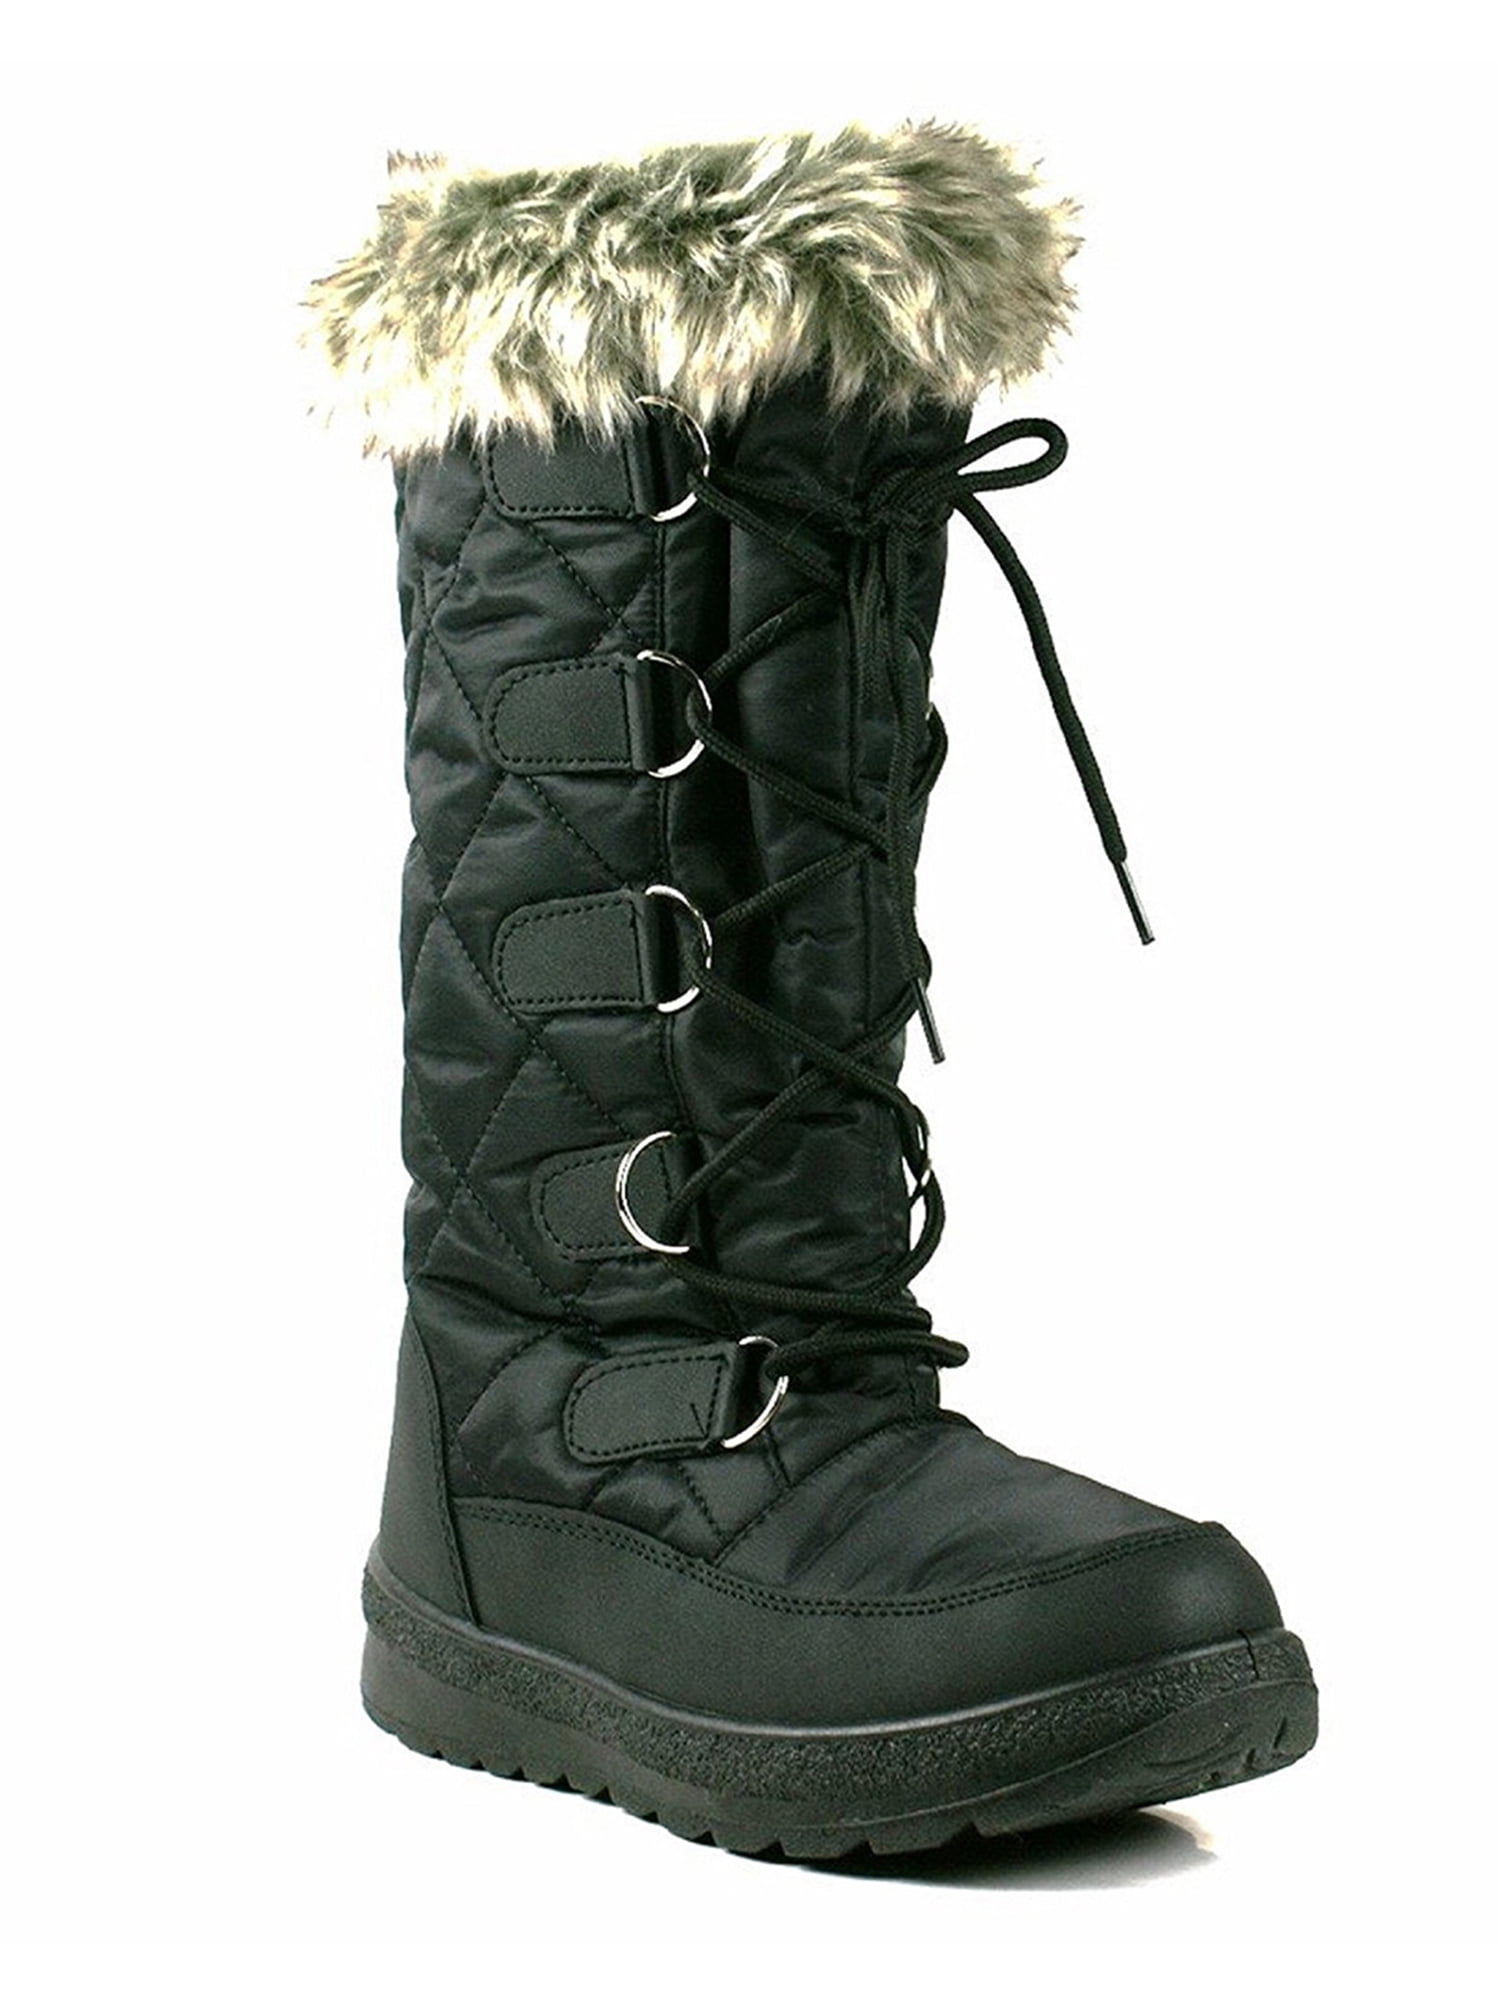 walmart winter boots for ladies